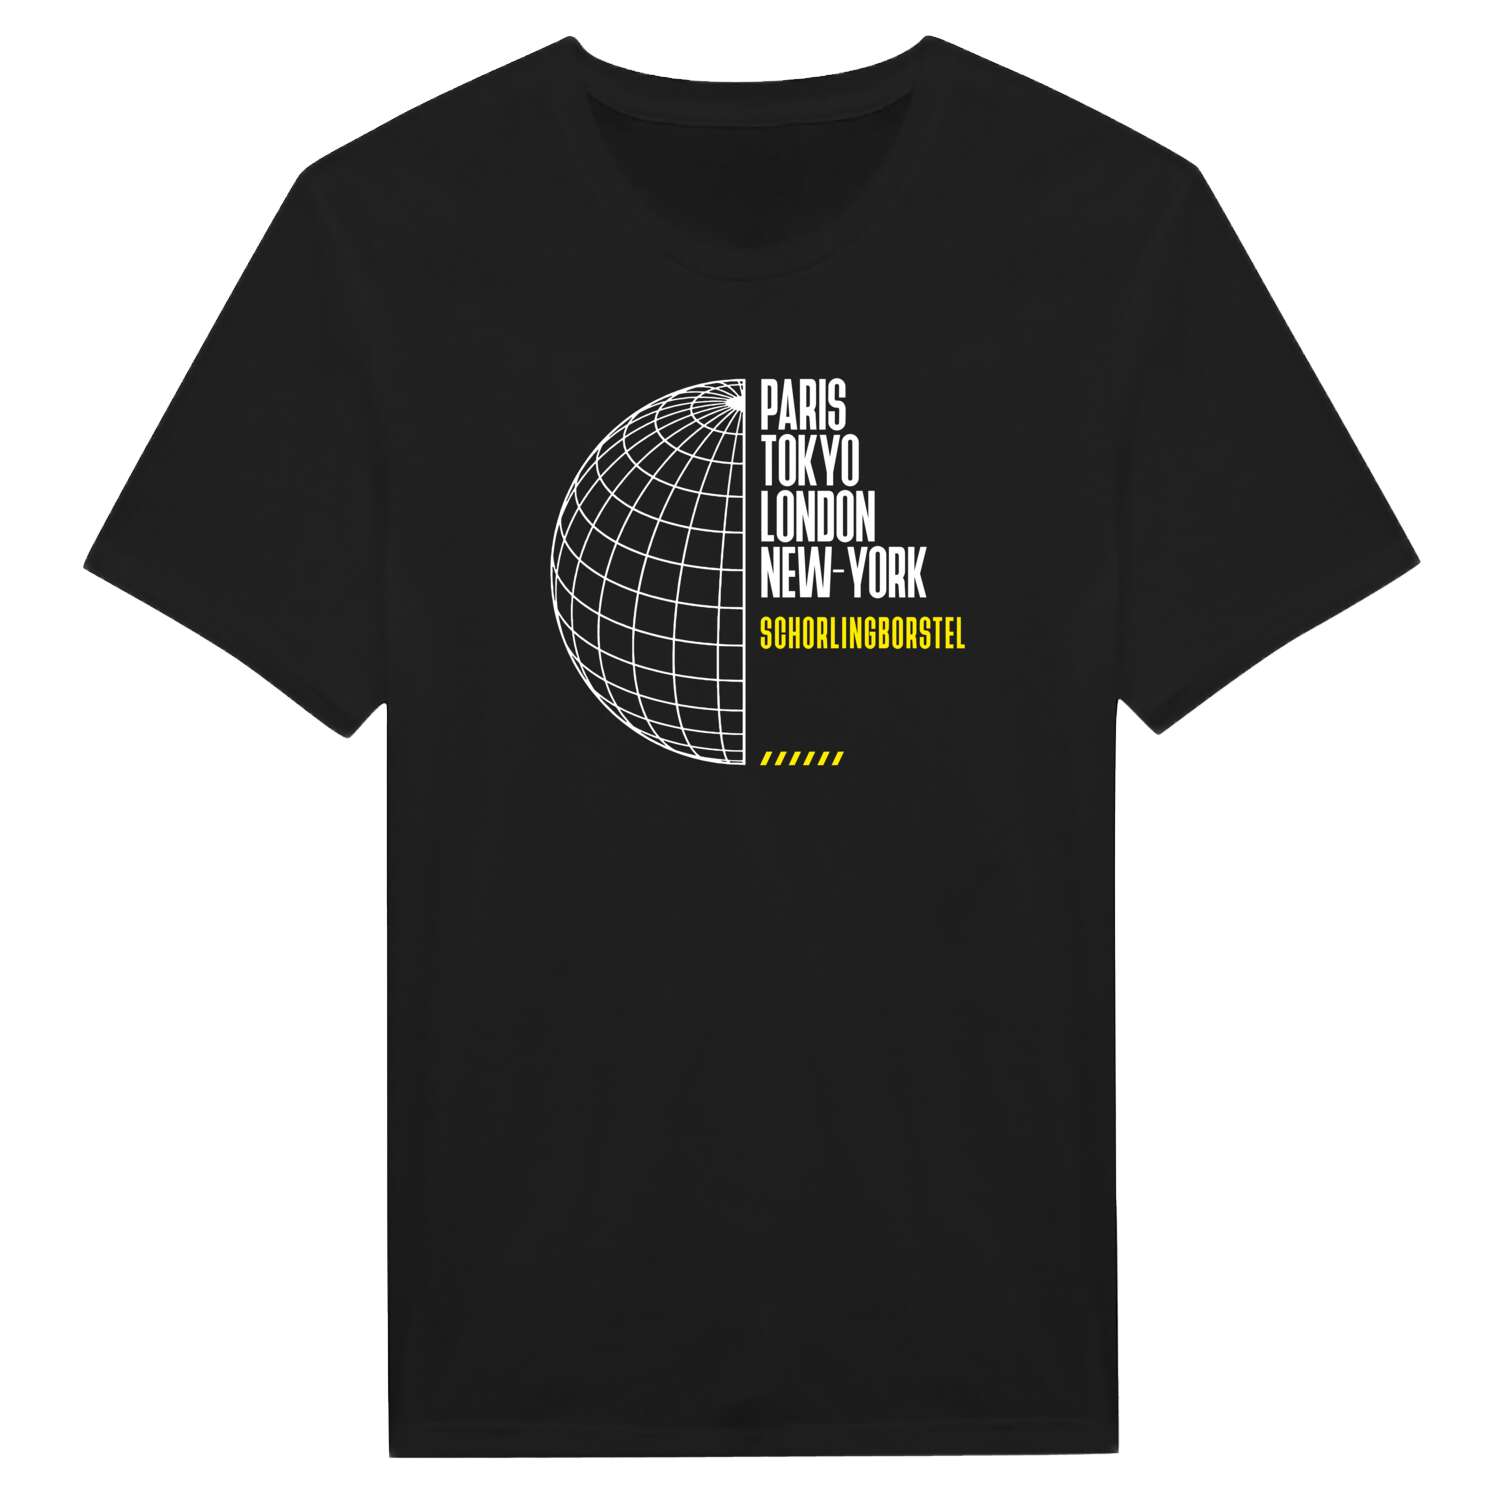 Schorlingborstel T-Shirt »Paris Tokyo London«